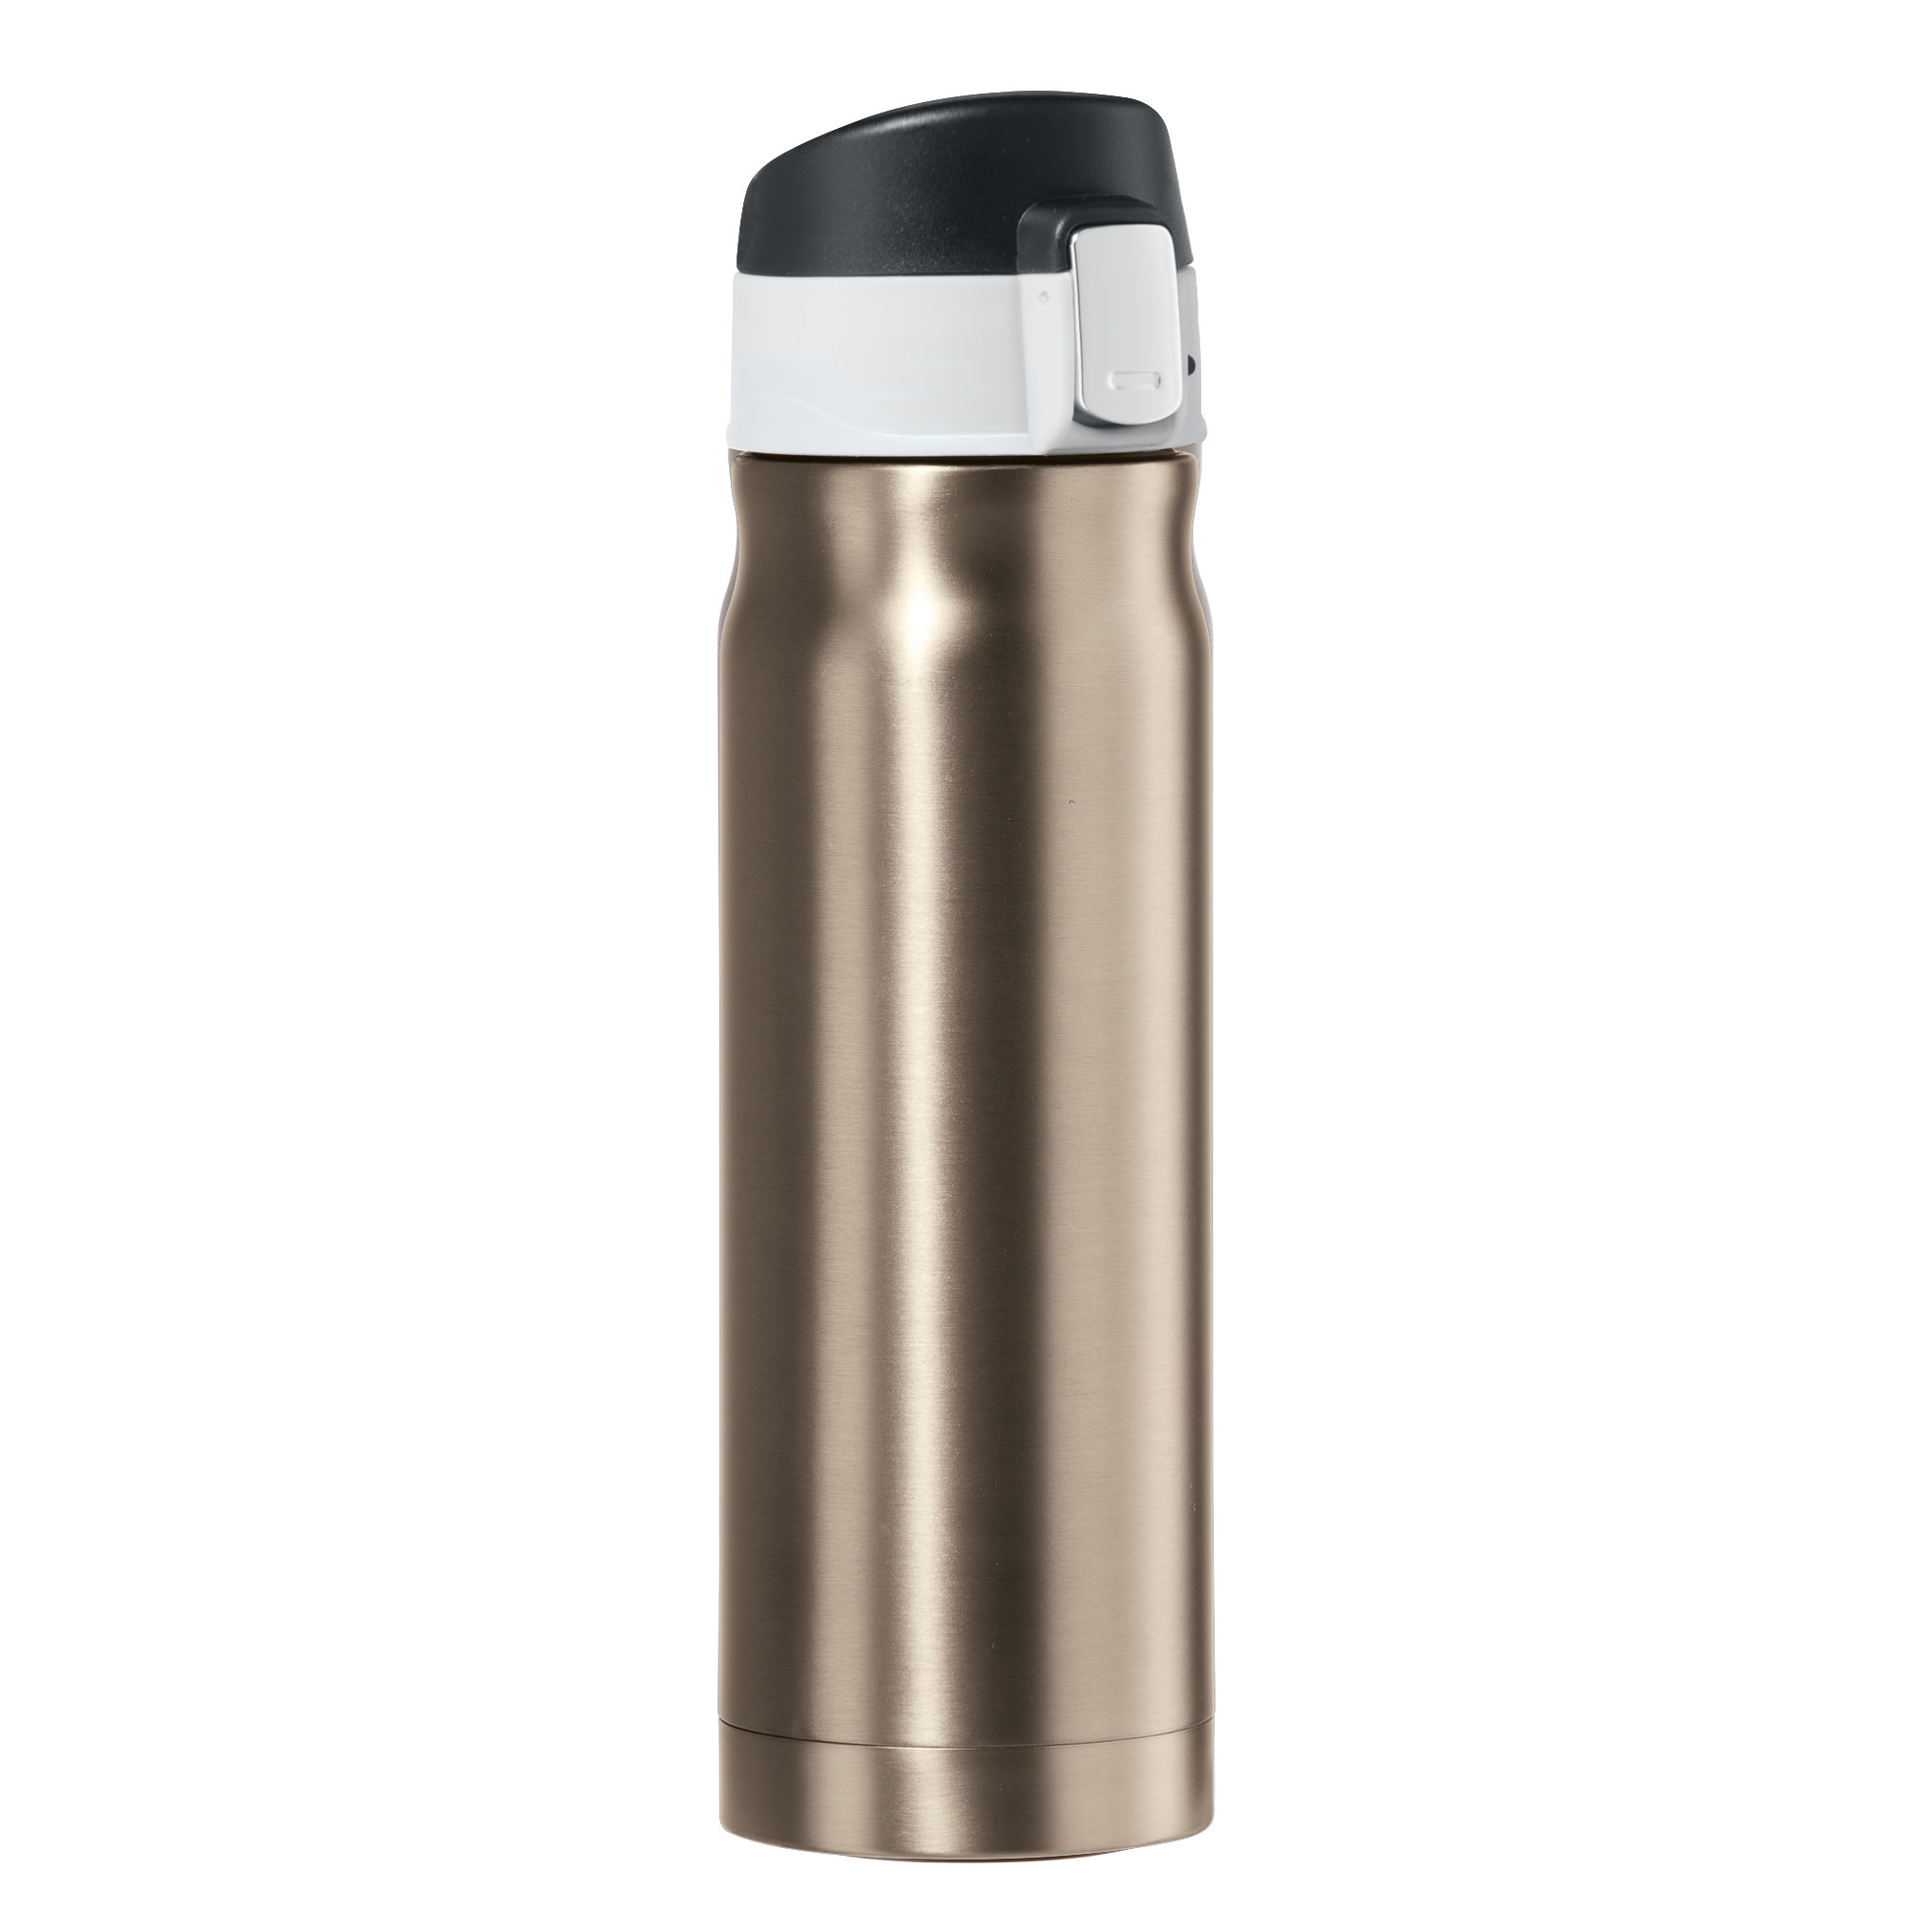 OGGI Terrain Insulated Stainless Steel Water Bottle - Large 32